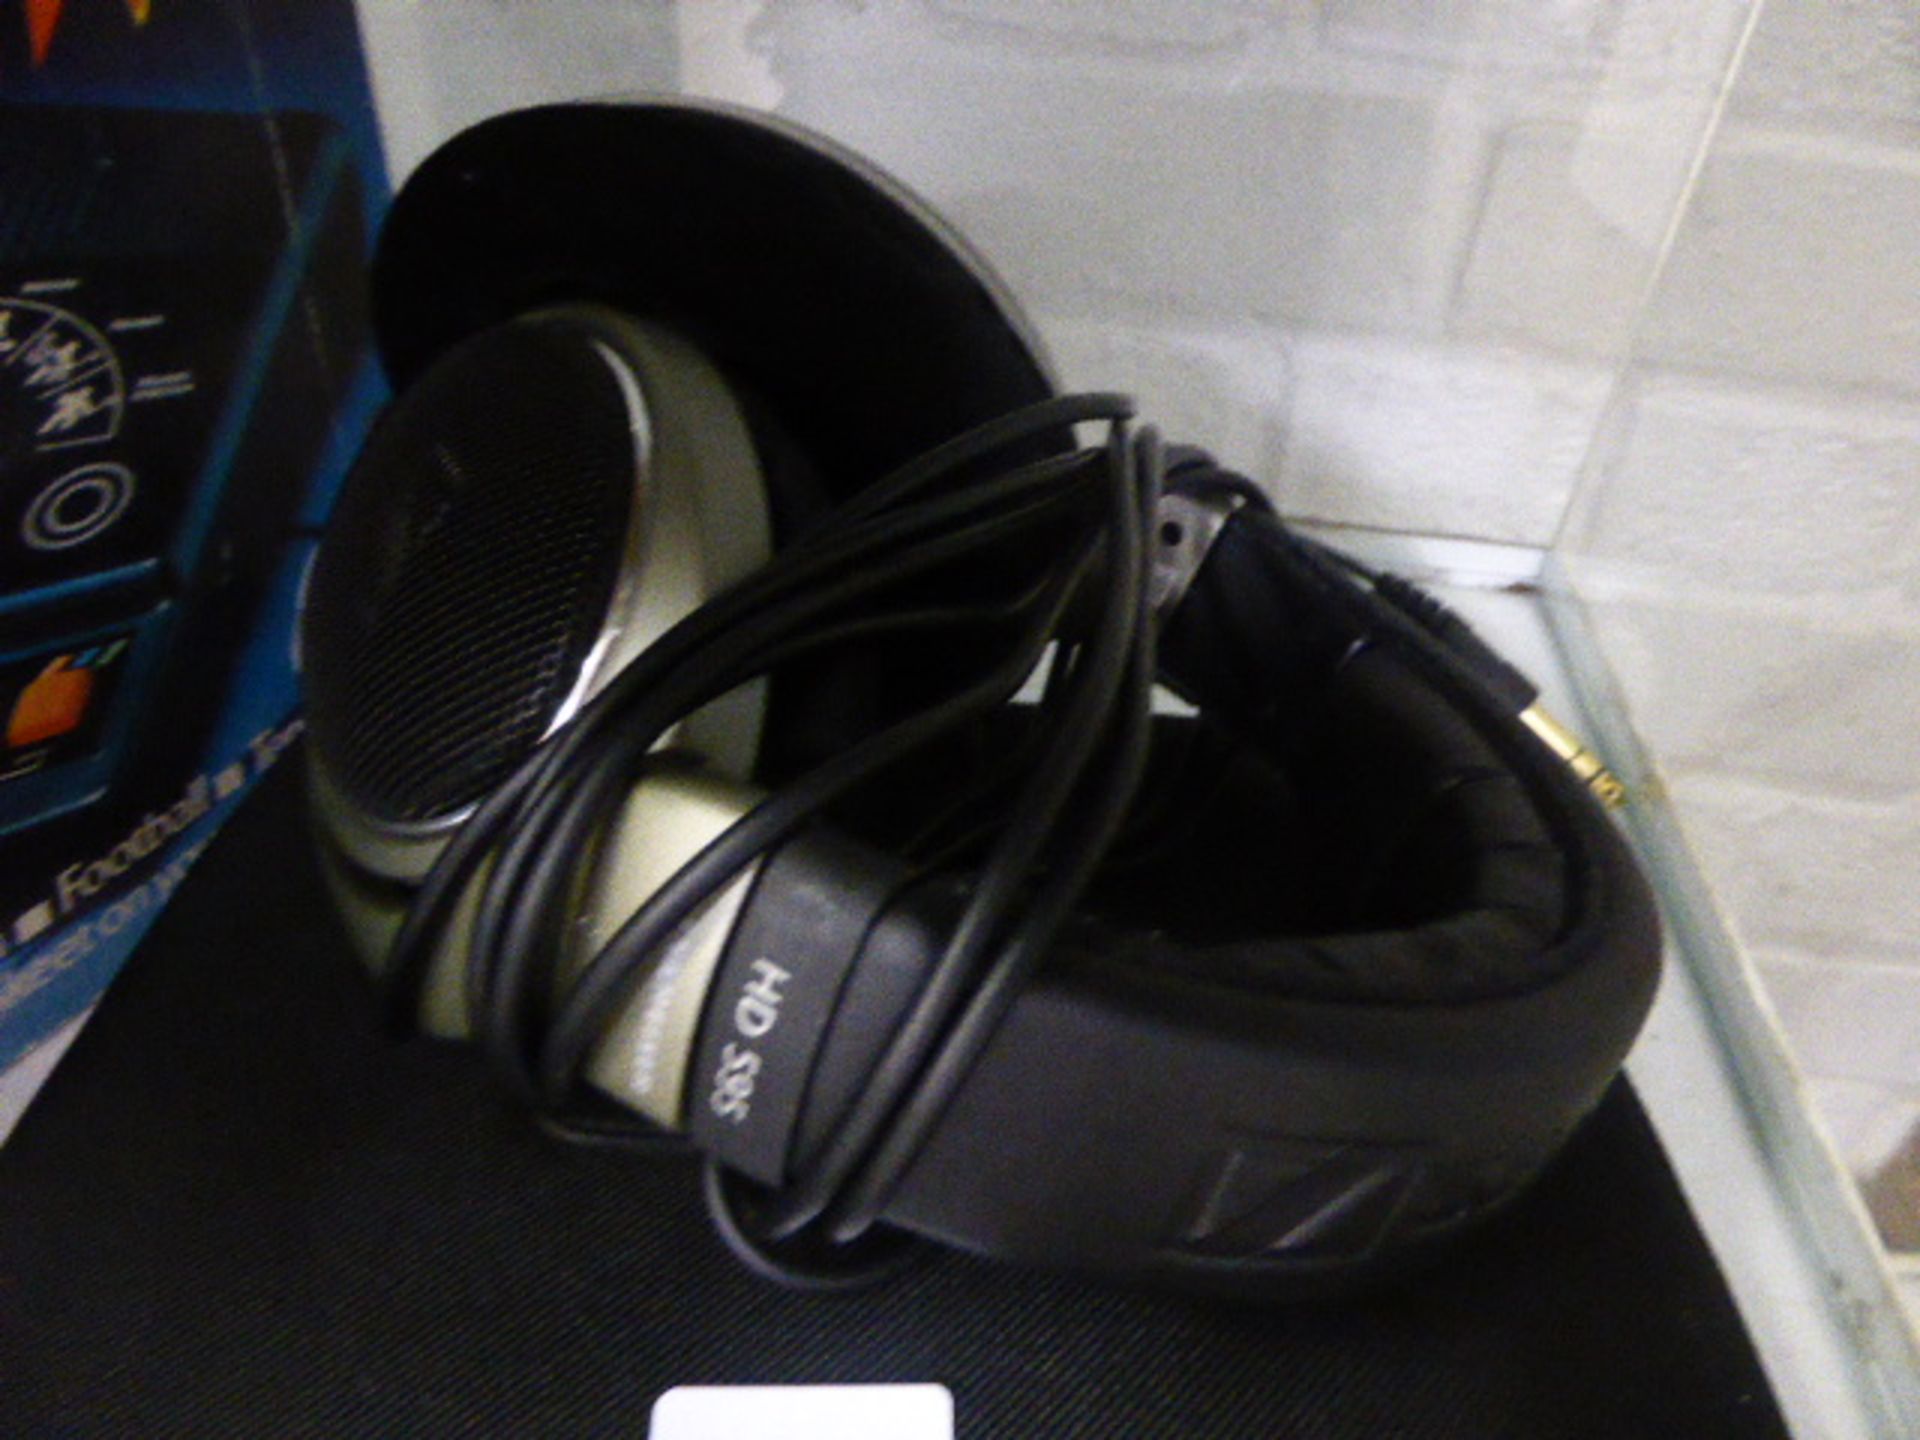 A pair of Sennheiser HD595 headphones